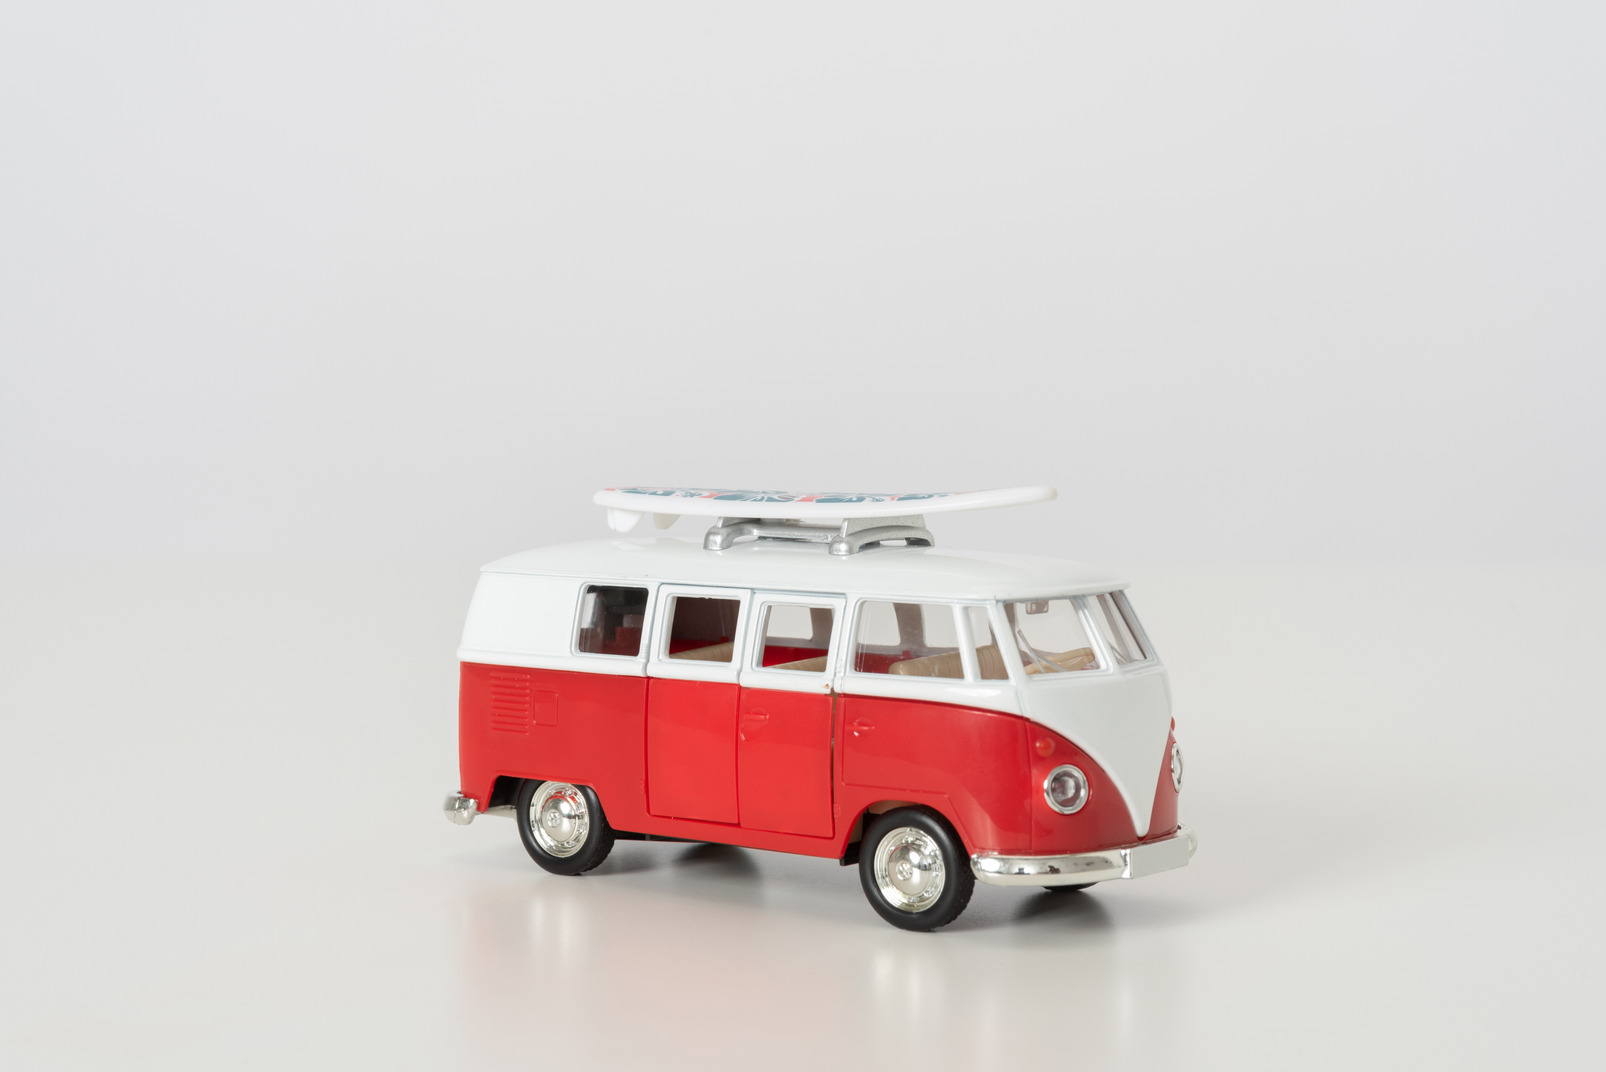 Hippie toy autobus photographed sideways on grey background